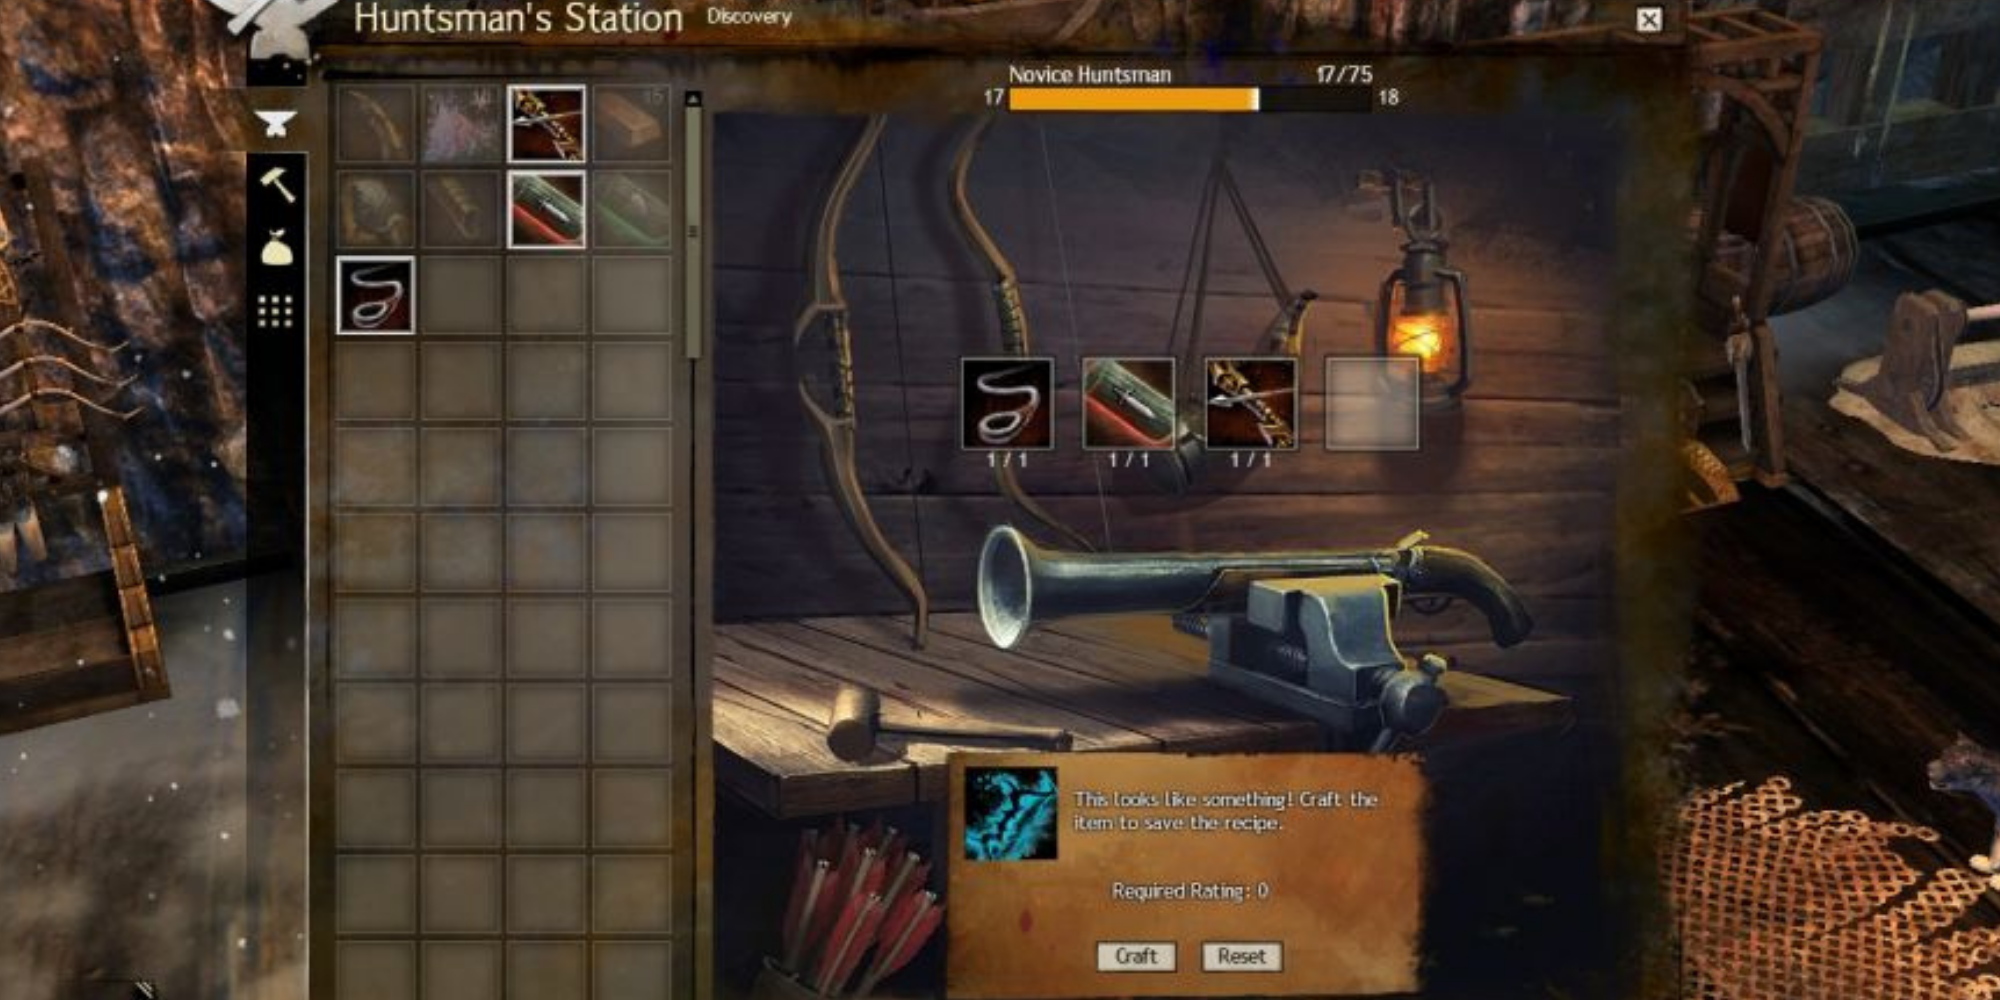 GW2 - screenshot of huntsman's station discovery tab